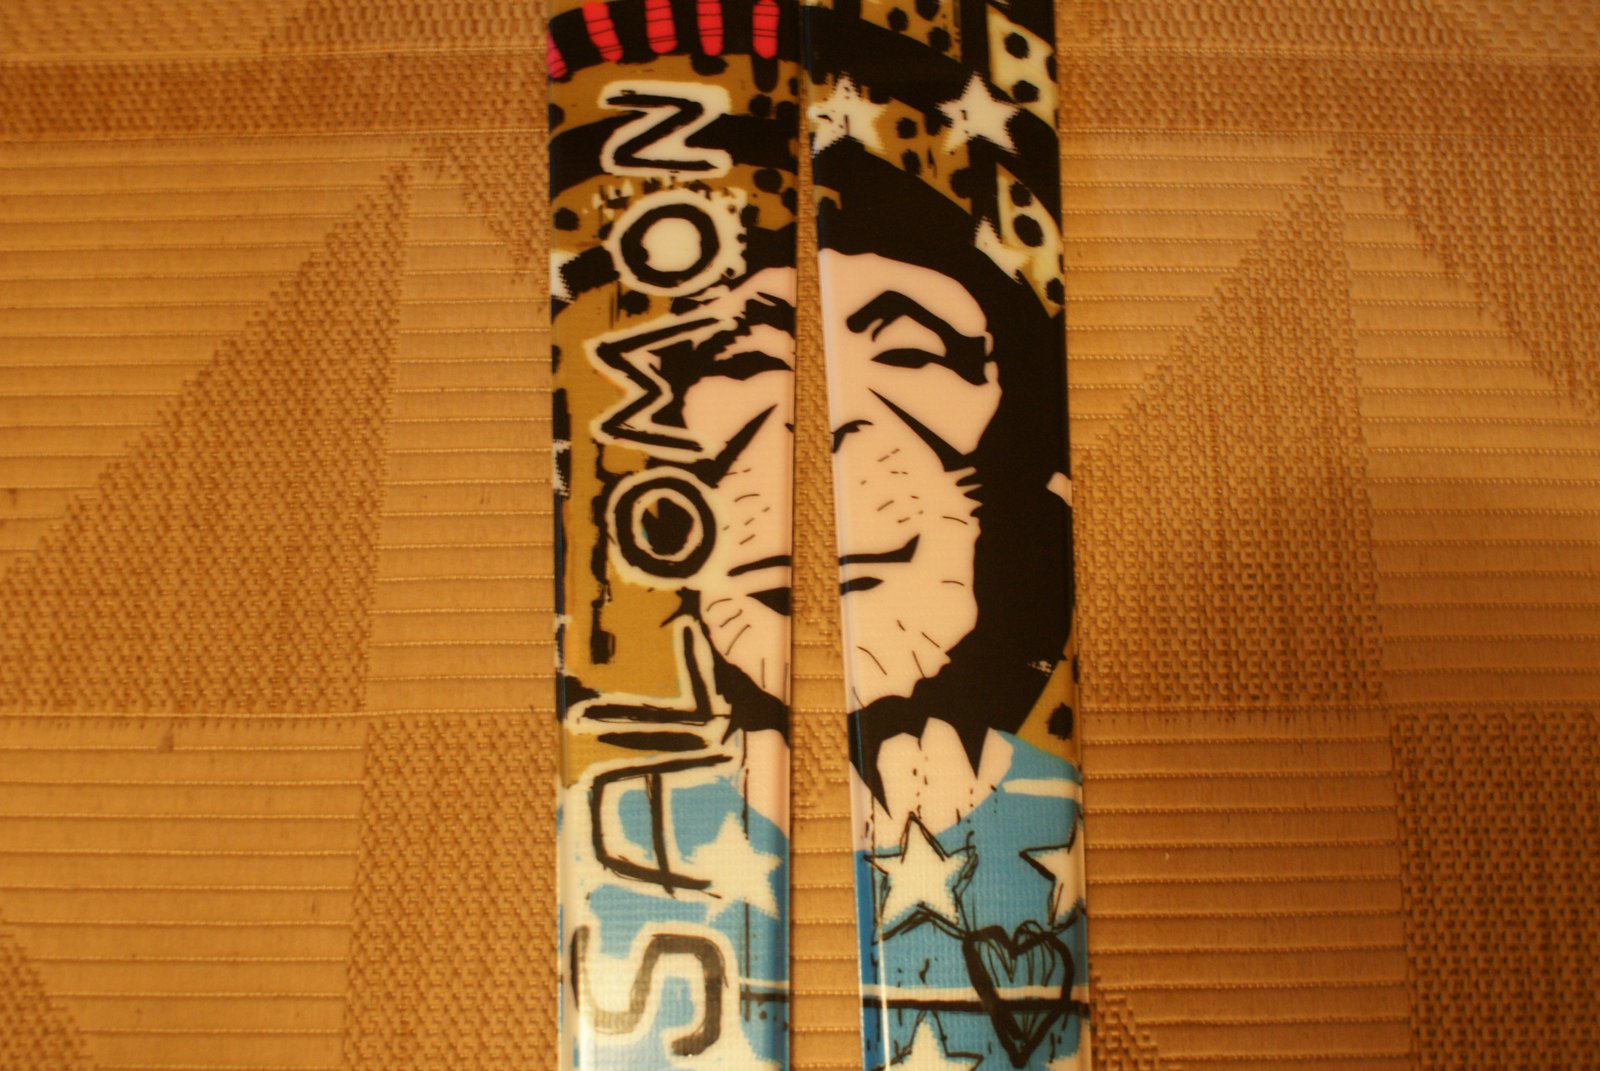 New Skis